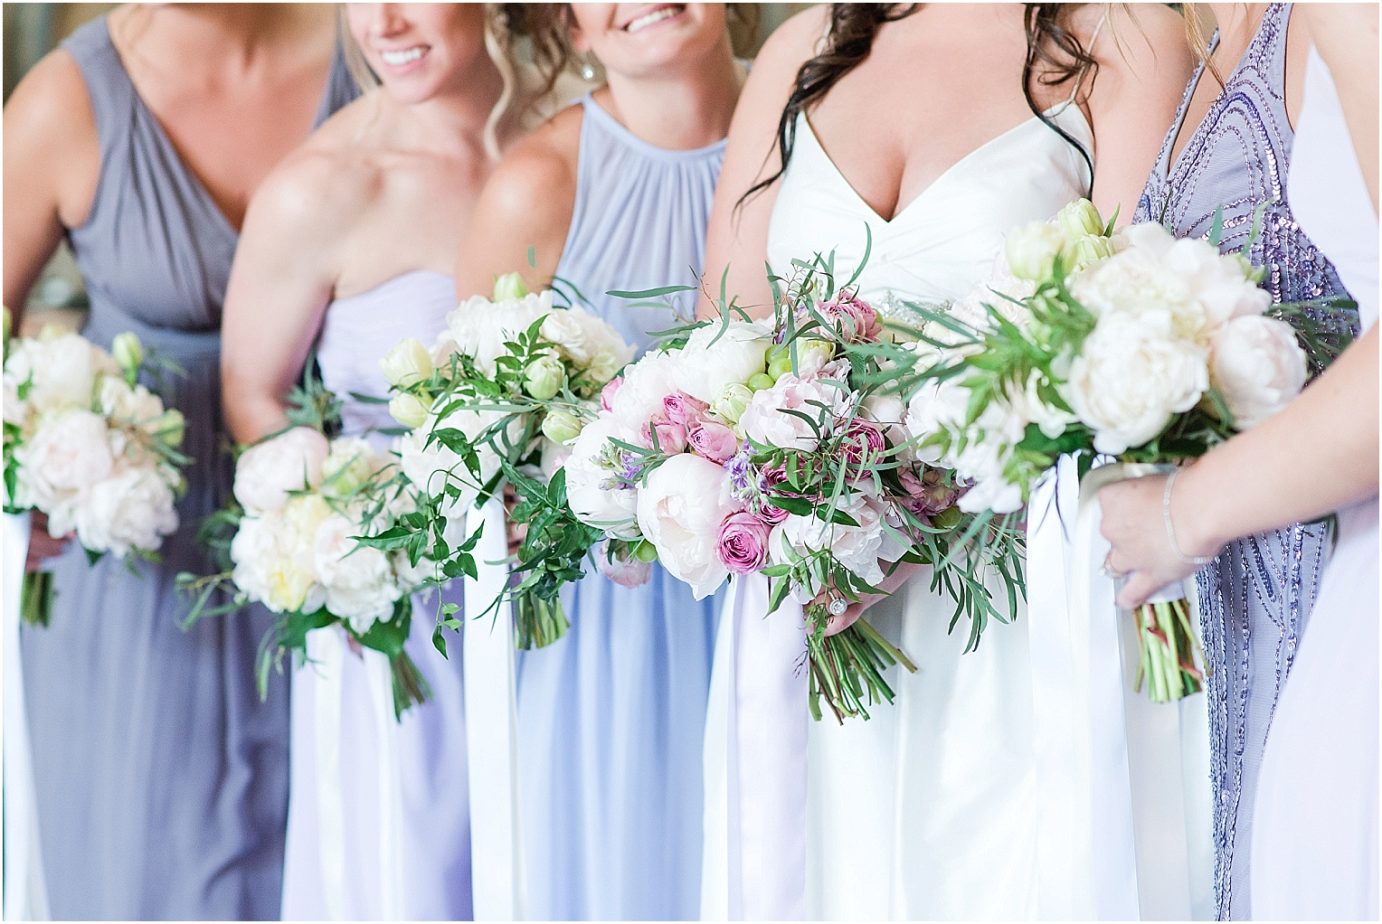 Best Wedding Bouquets of 2016 Pale wedding flower bouquets